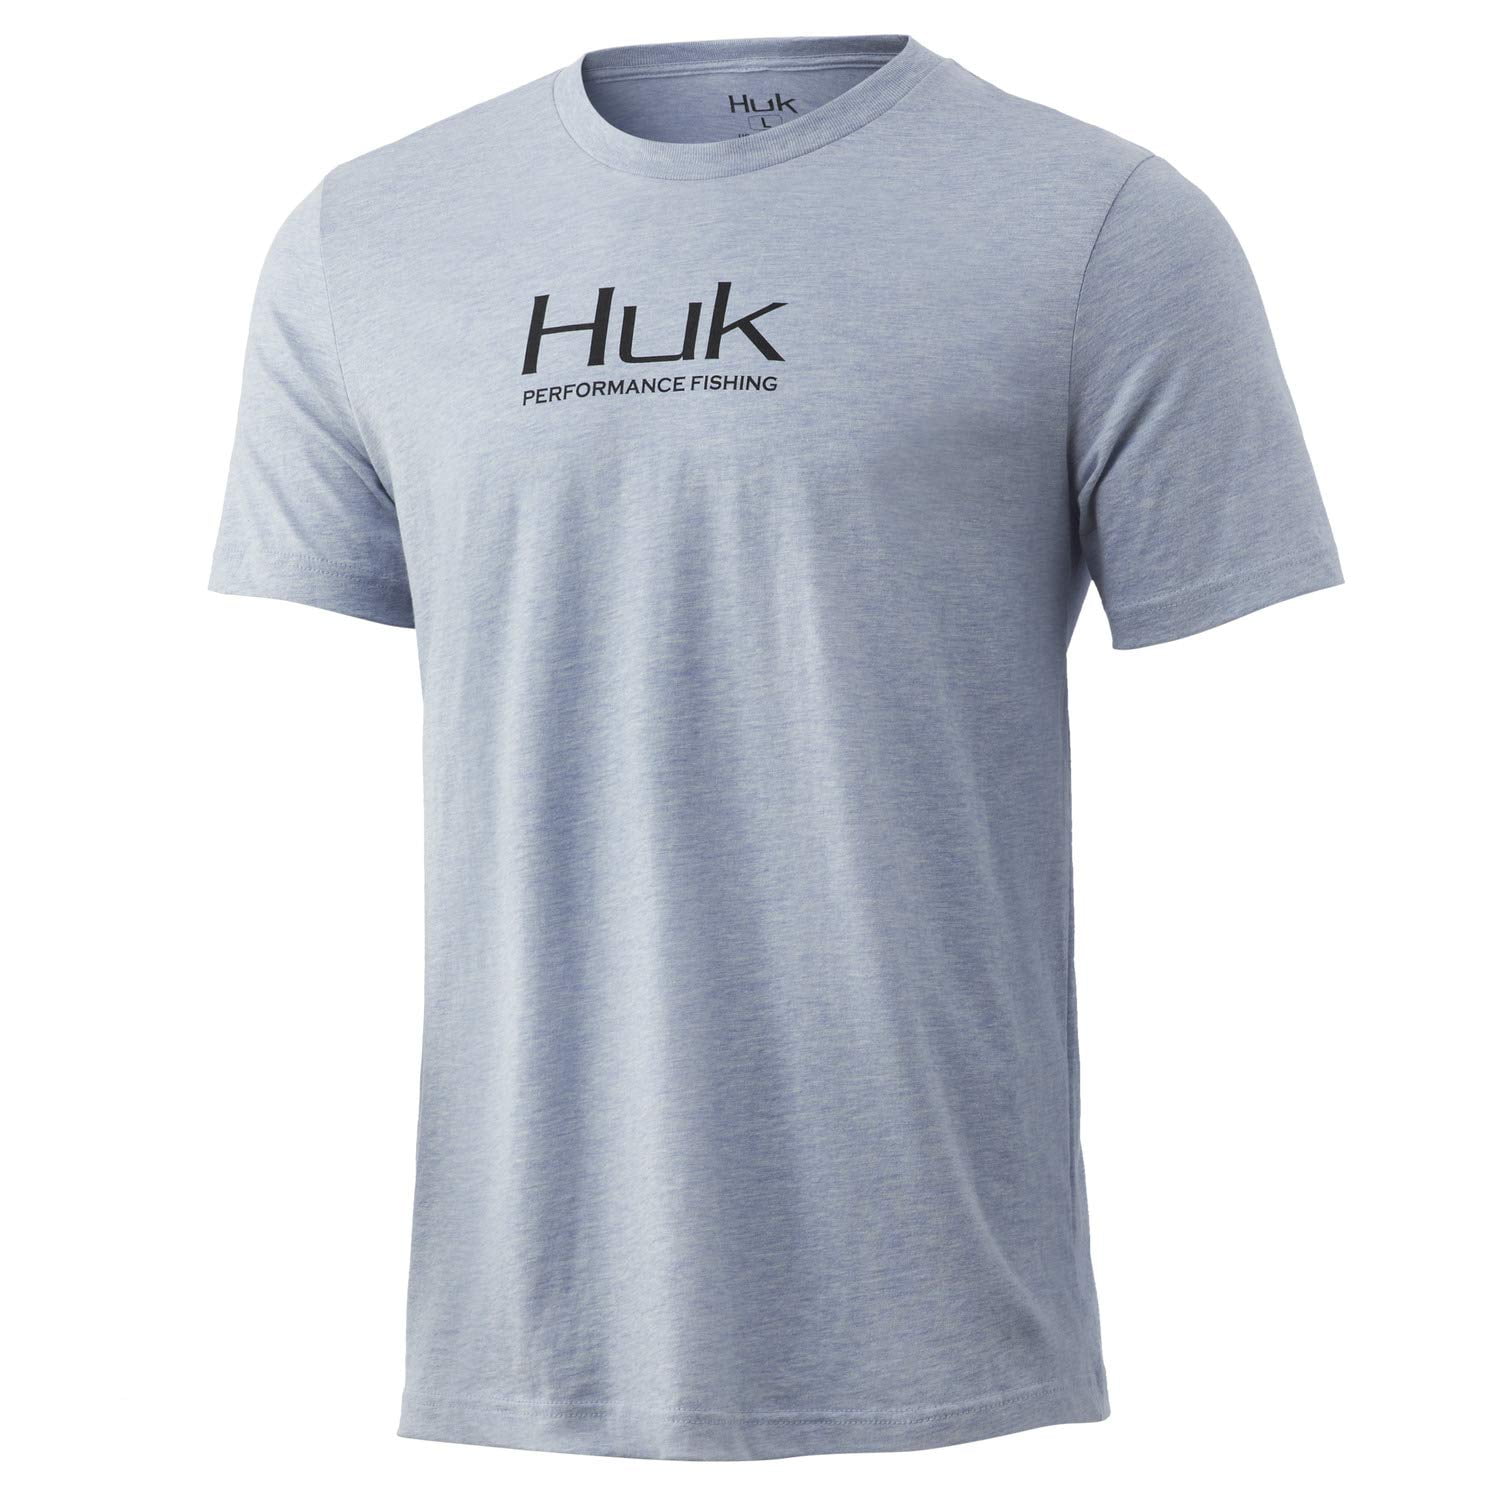 Huk Men's Performance Short Sleeve Fishing Tee Shirt (Seafoam